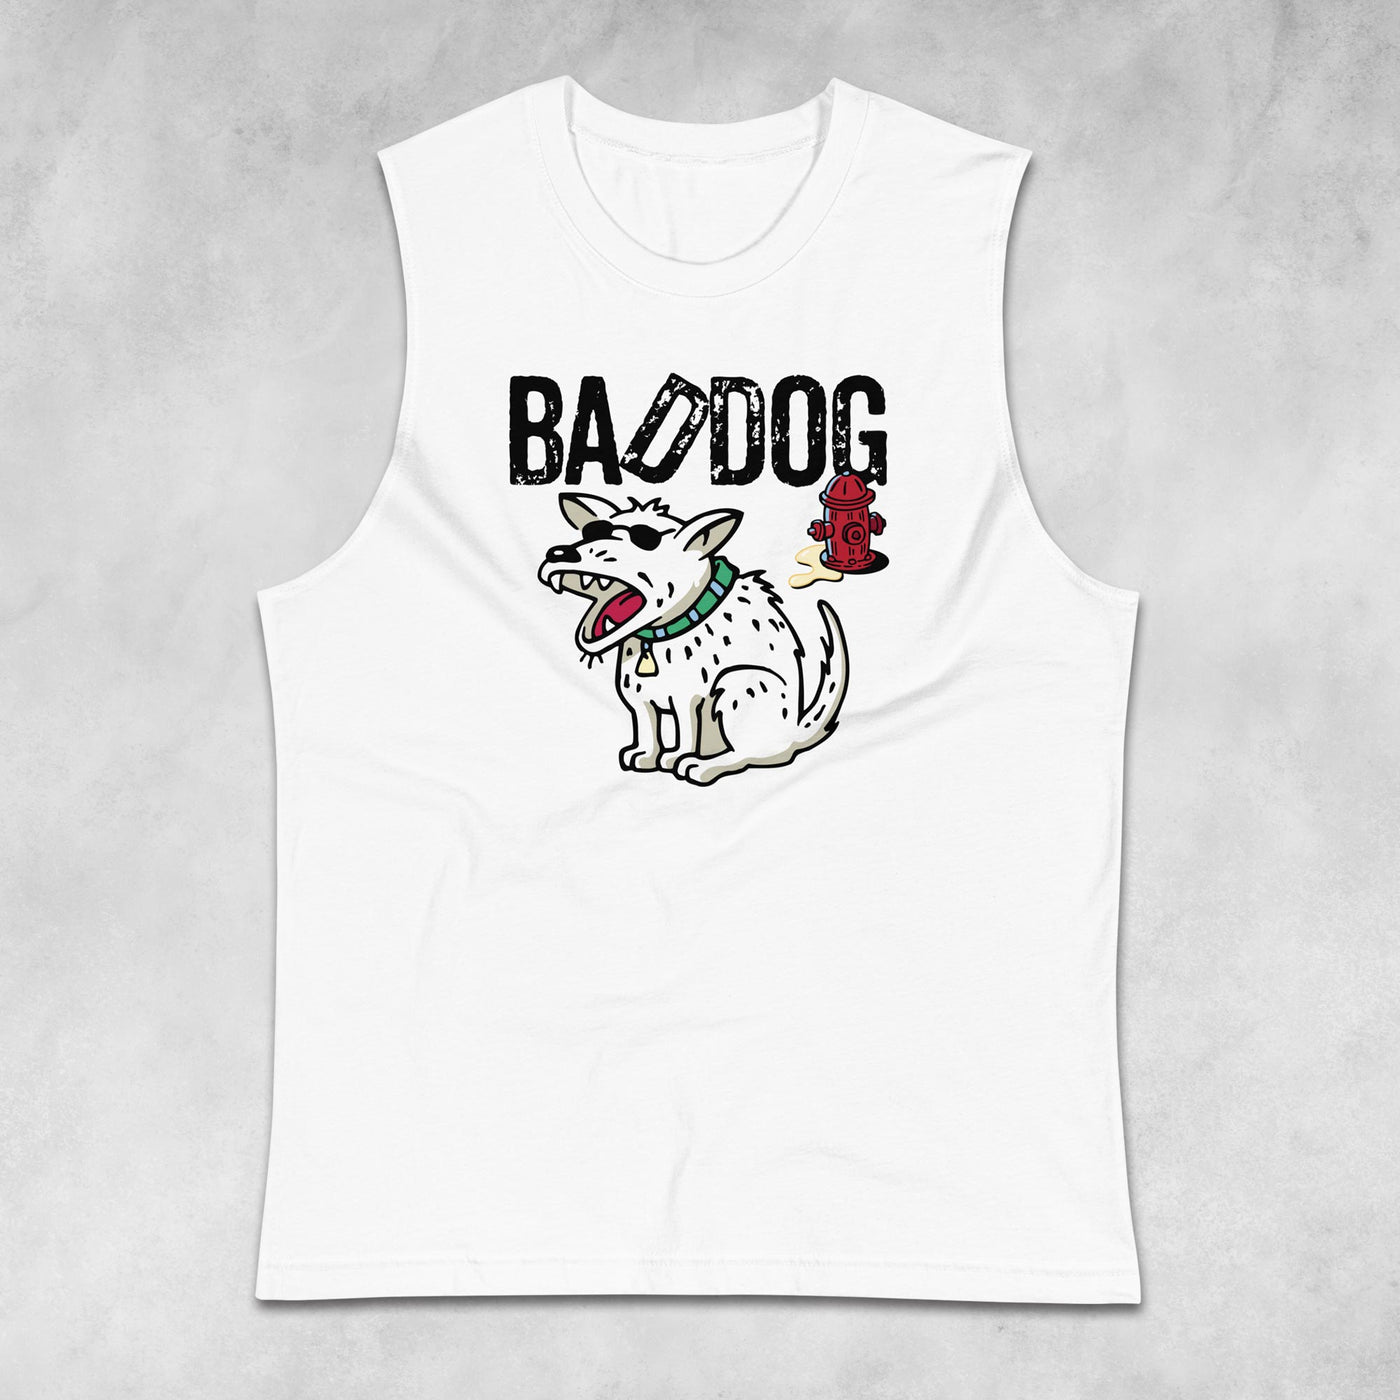 Bad Dog Whiz - Muscle Shirt